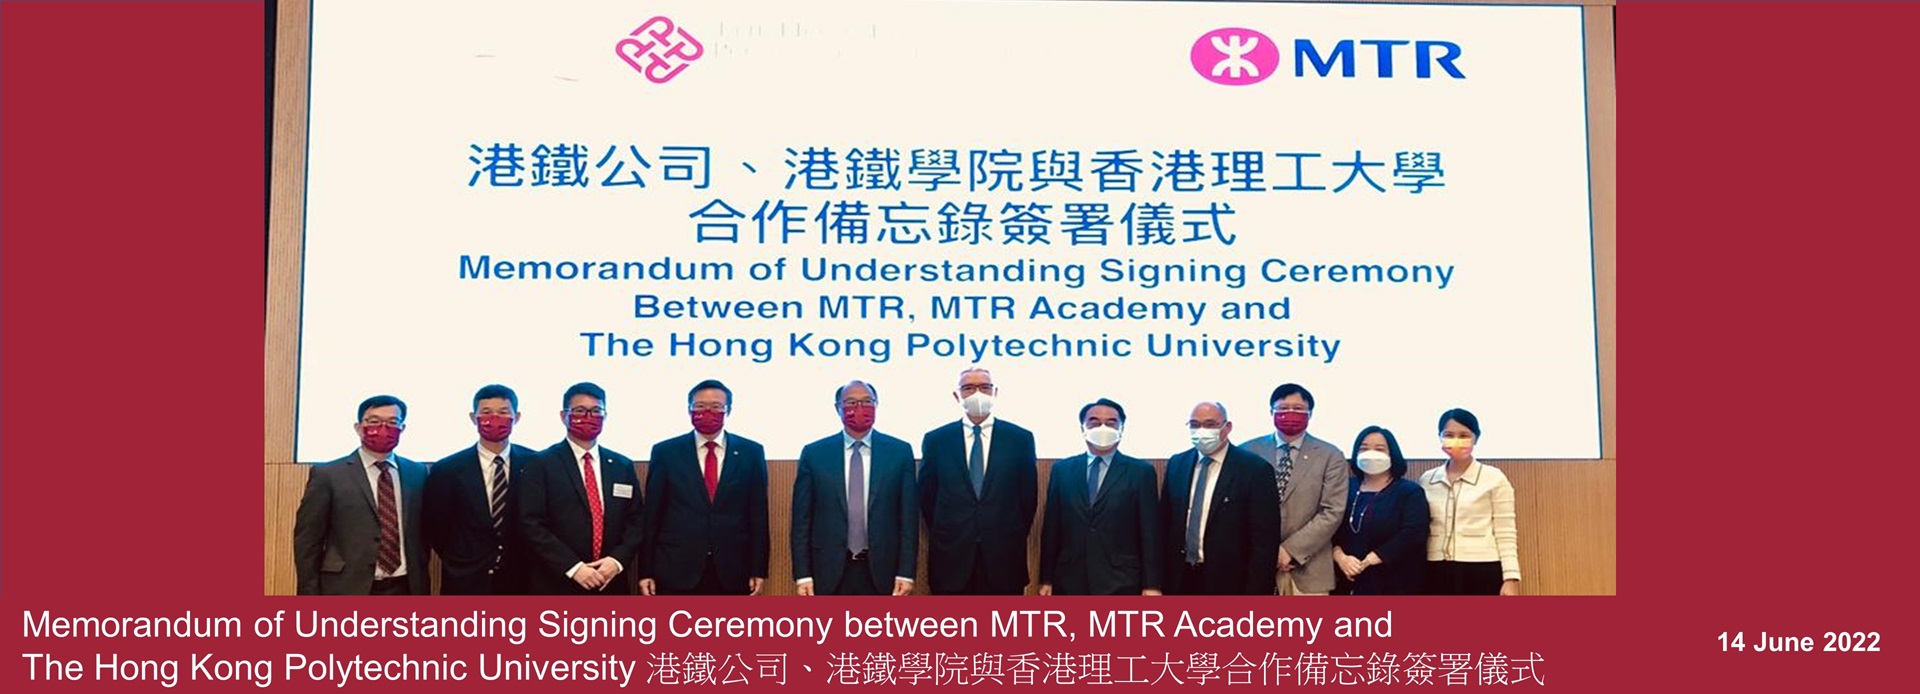 Memorandum of Understanding Signing Ceremony between MTR , MTR Academy and The Hong Kong Polytechnic University 港鐵公司、港鐵學院與香港理工大學合作備忘錄簽署儀式